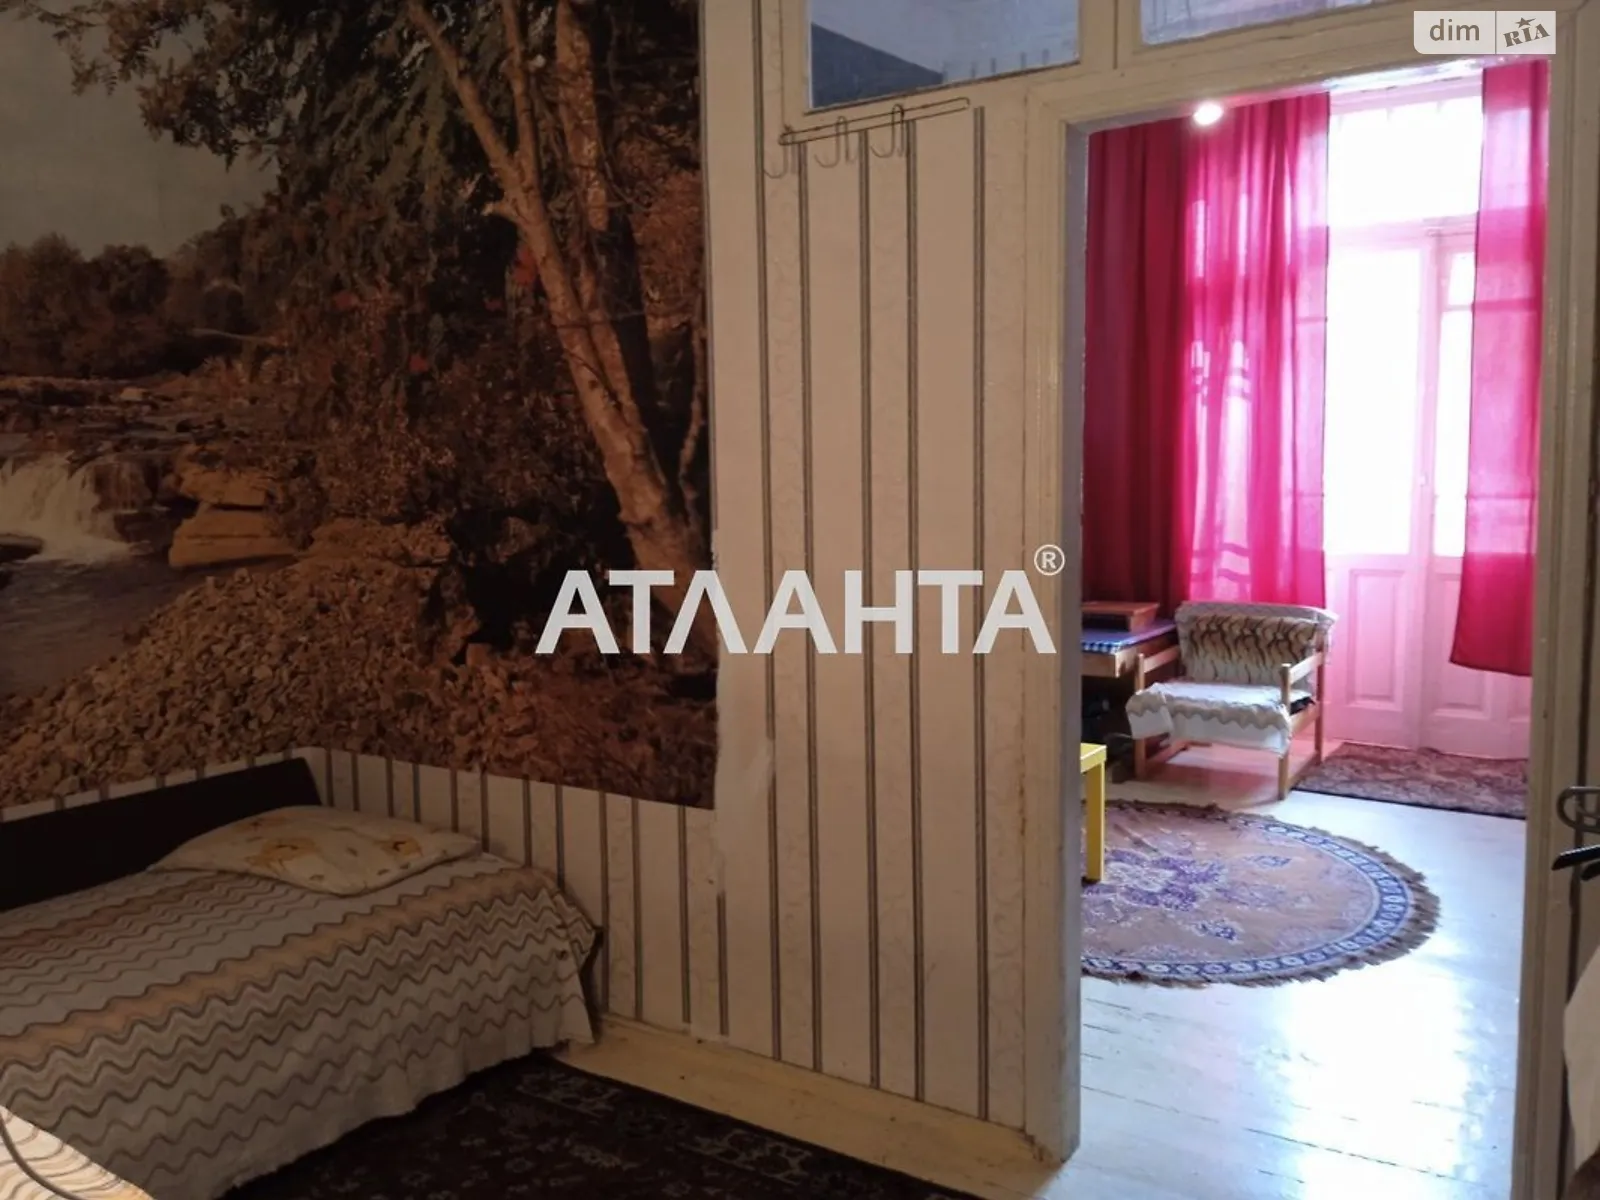 Продается комната 24 кв. м в Одессе, цена: 20000 $ - фото 1